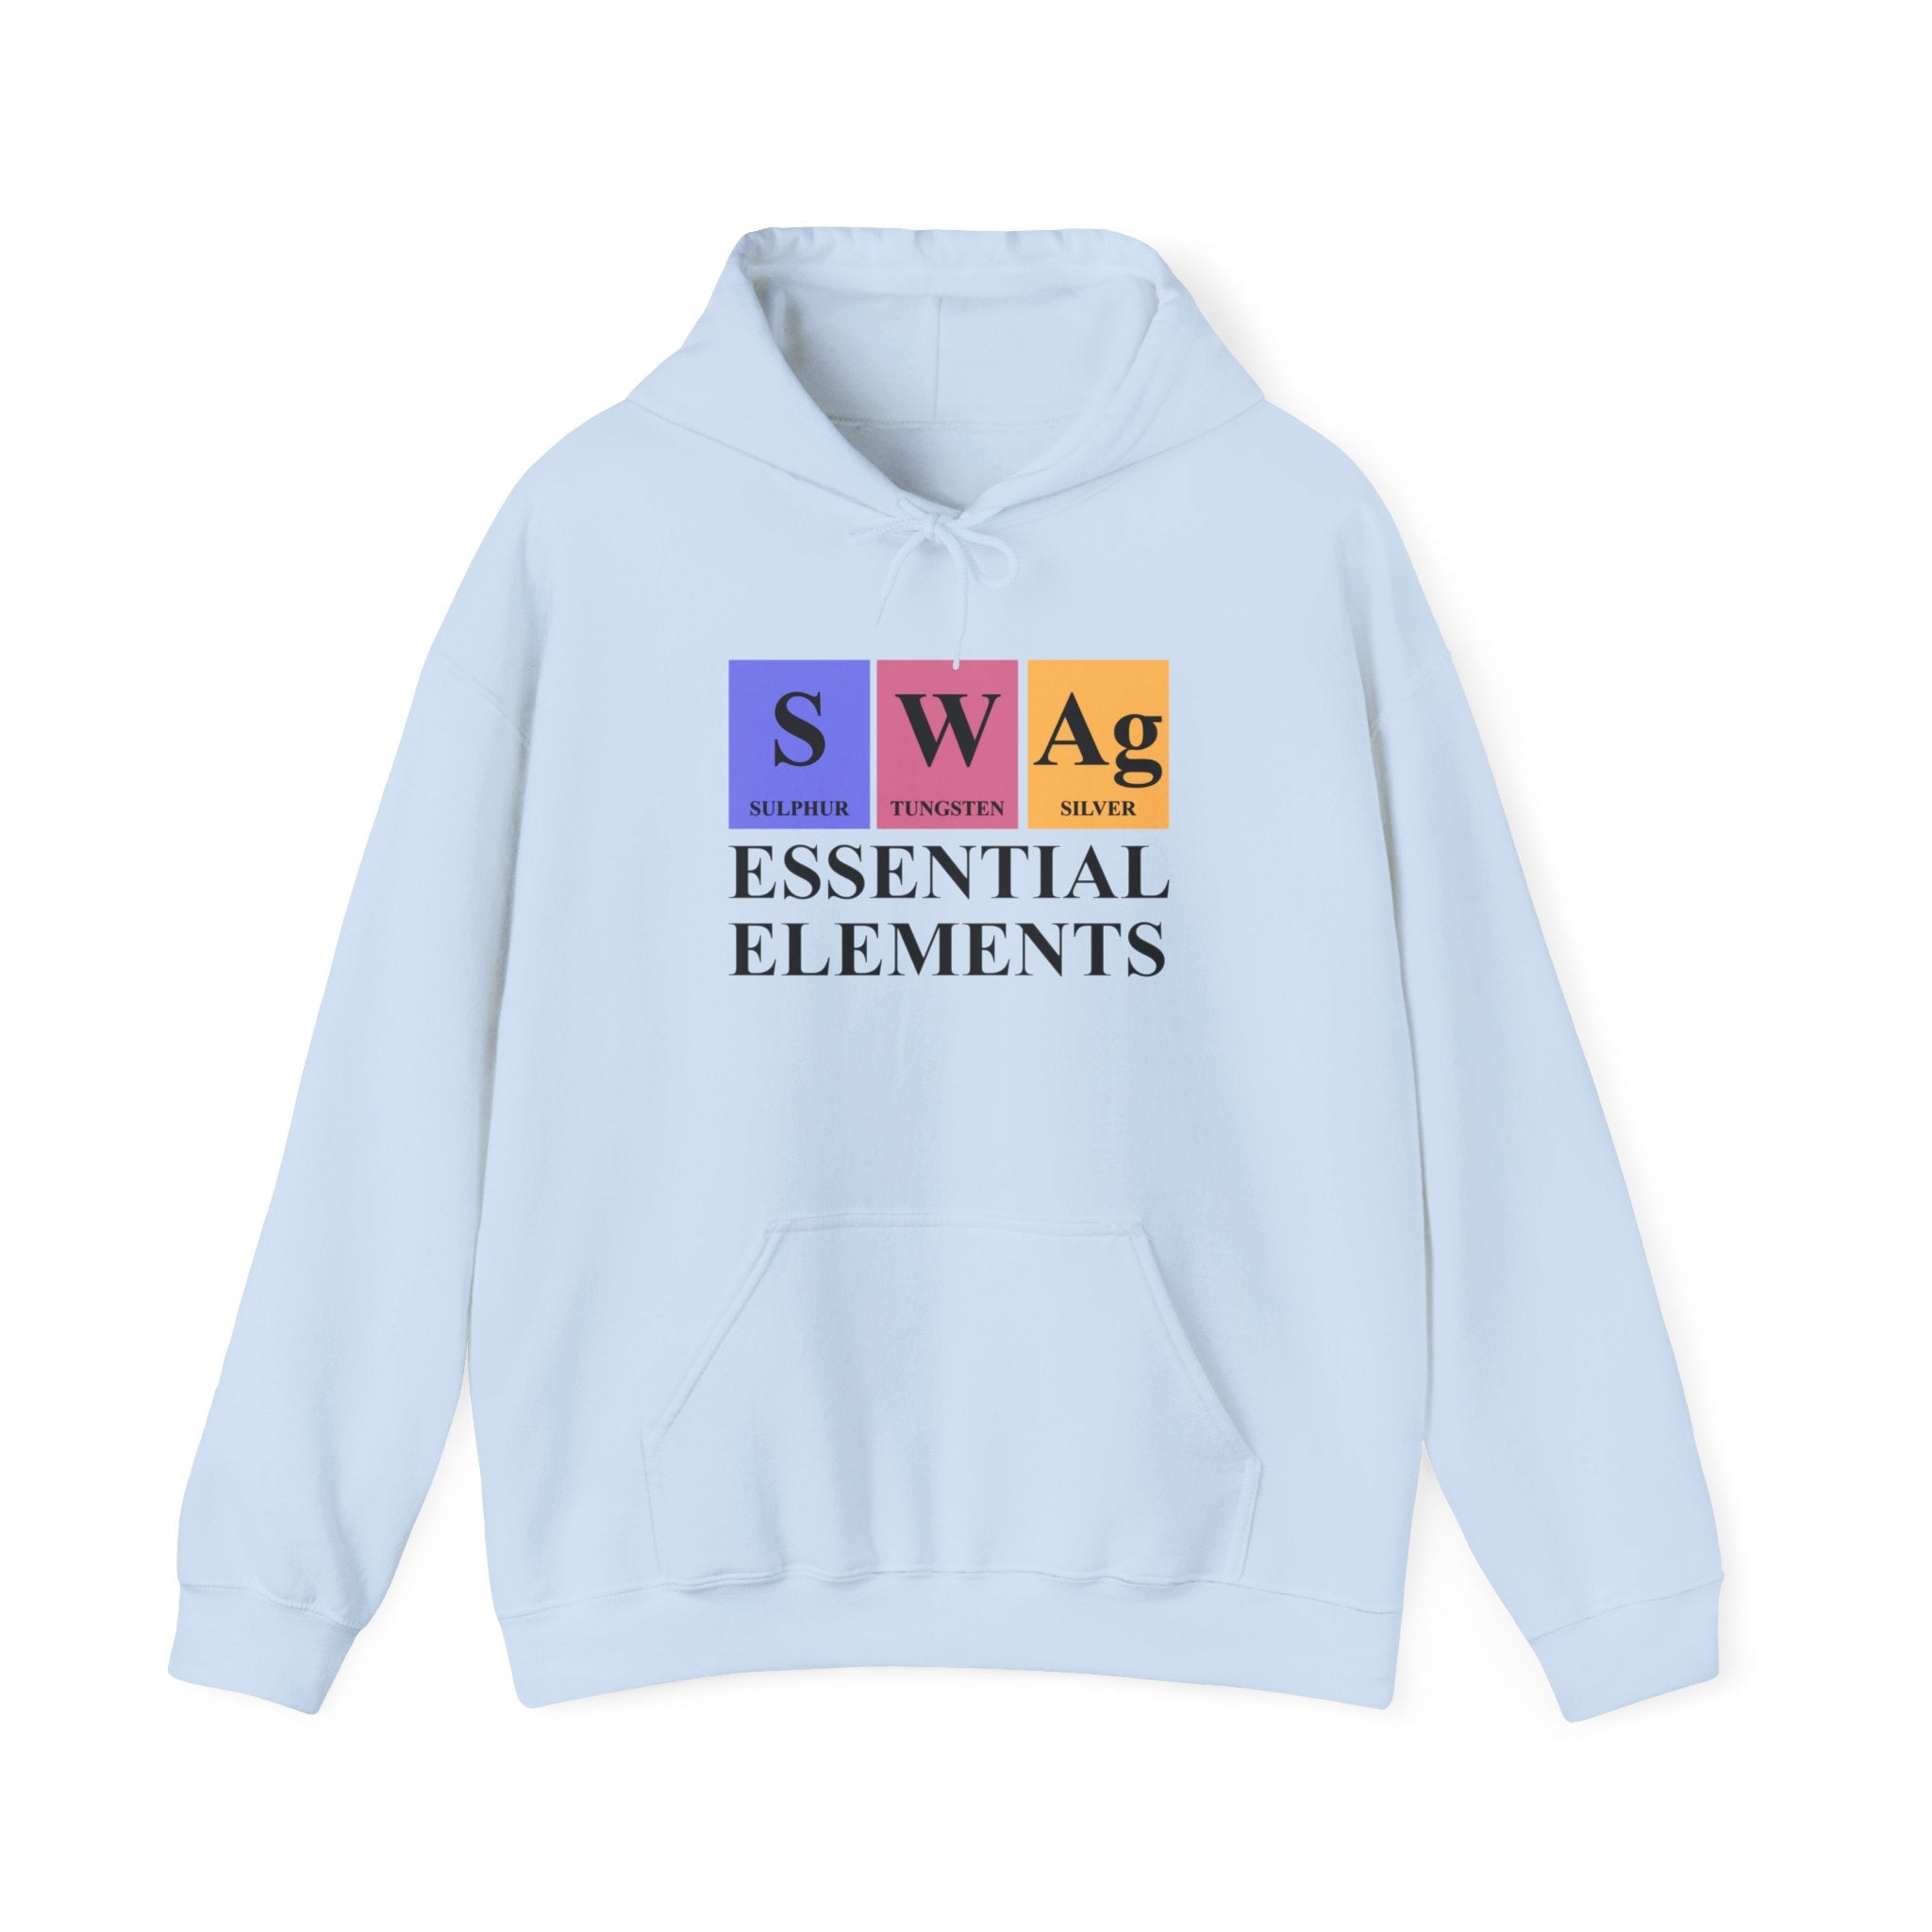 S-W-Ag - Hooded Sweatshirt